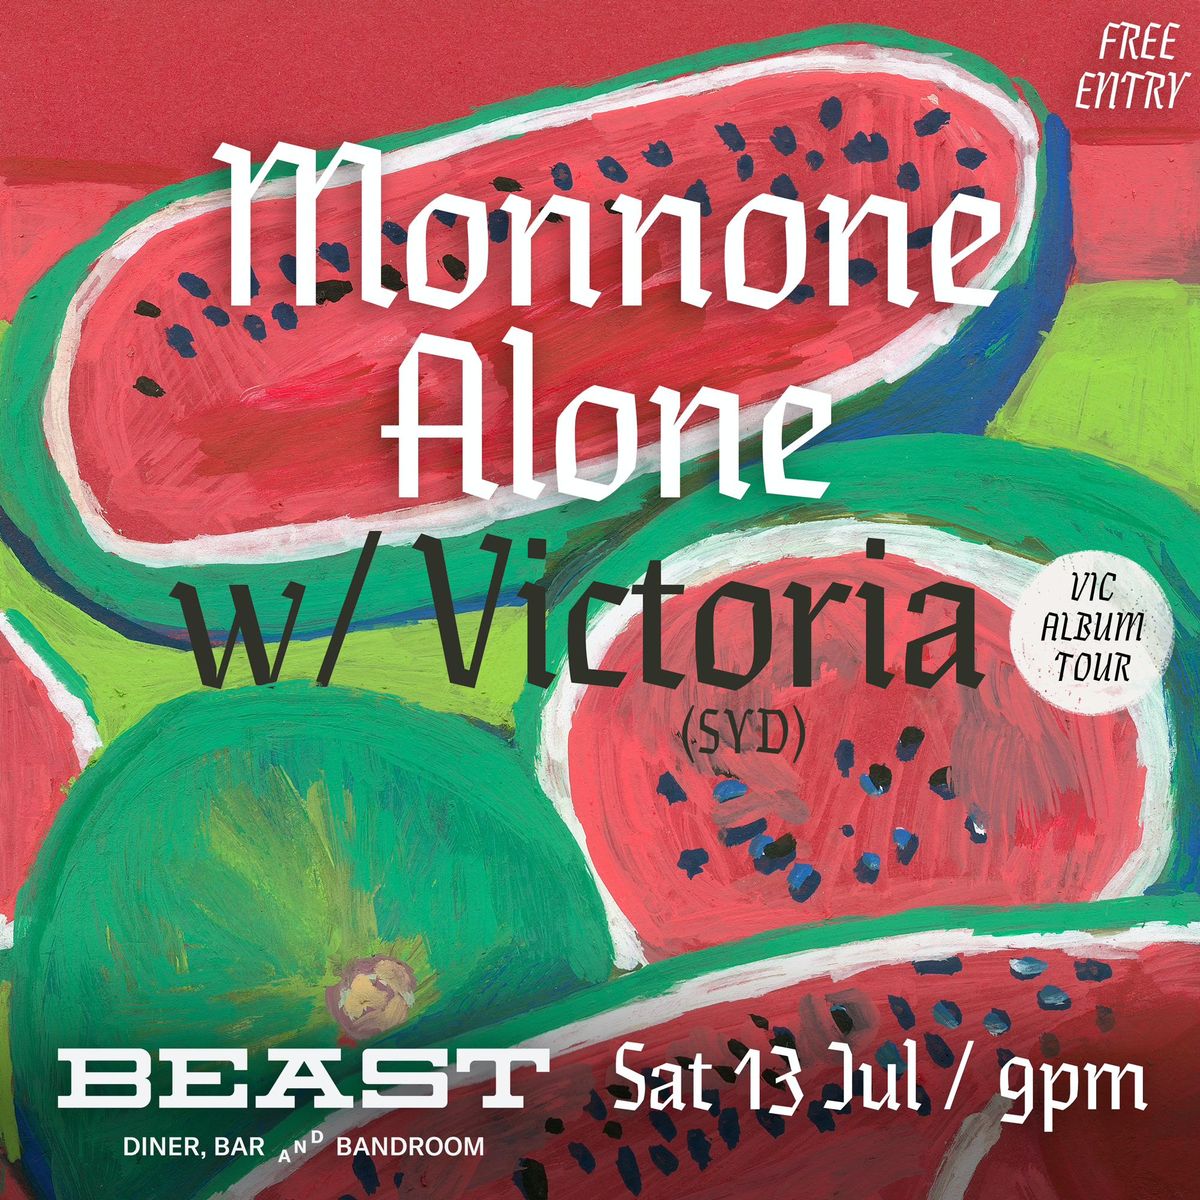 Monnone Alone + Victoria (Sydney) play the Beast